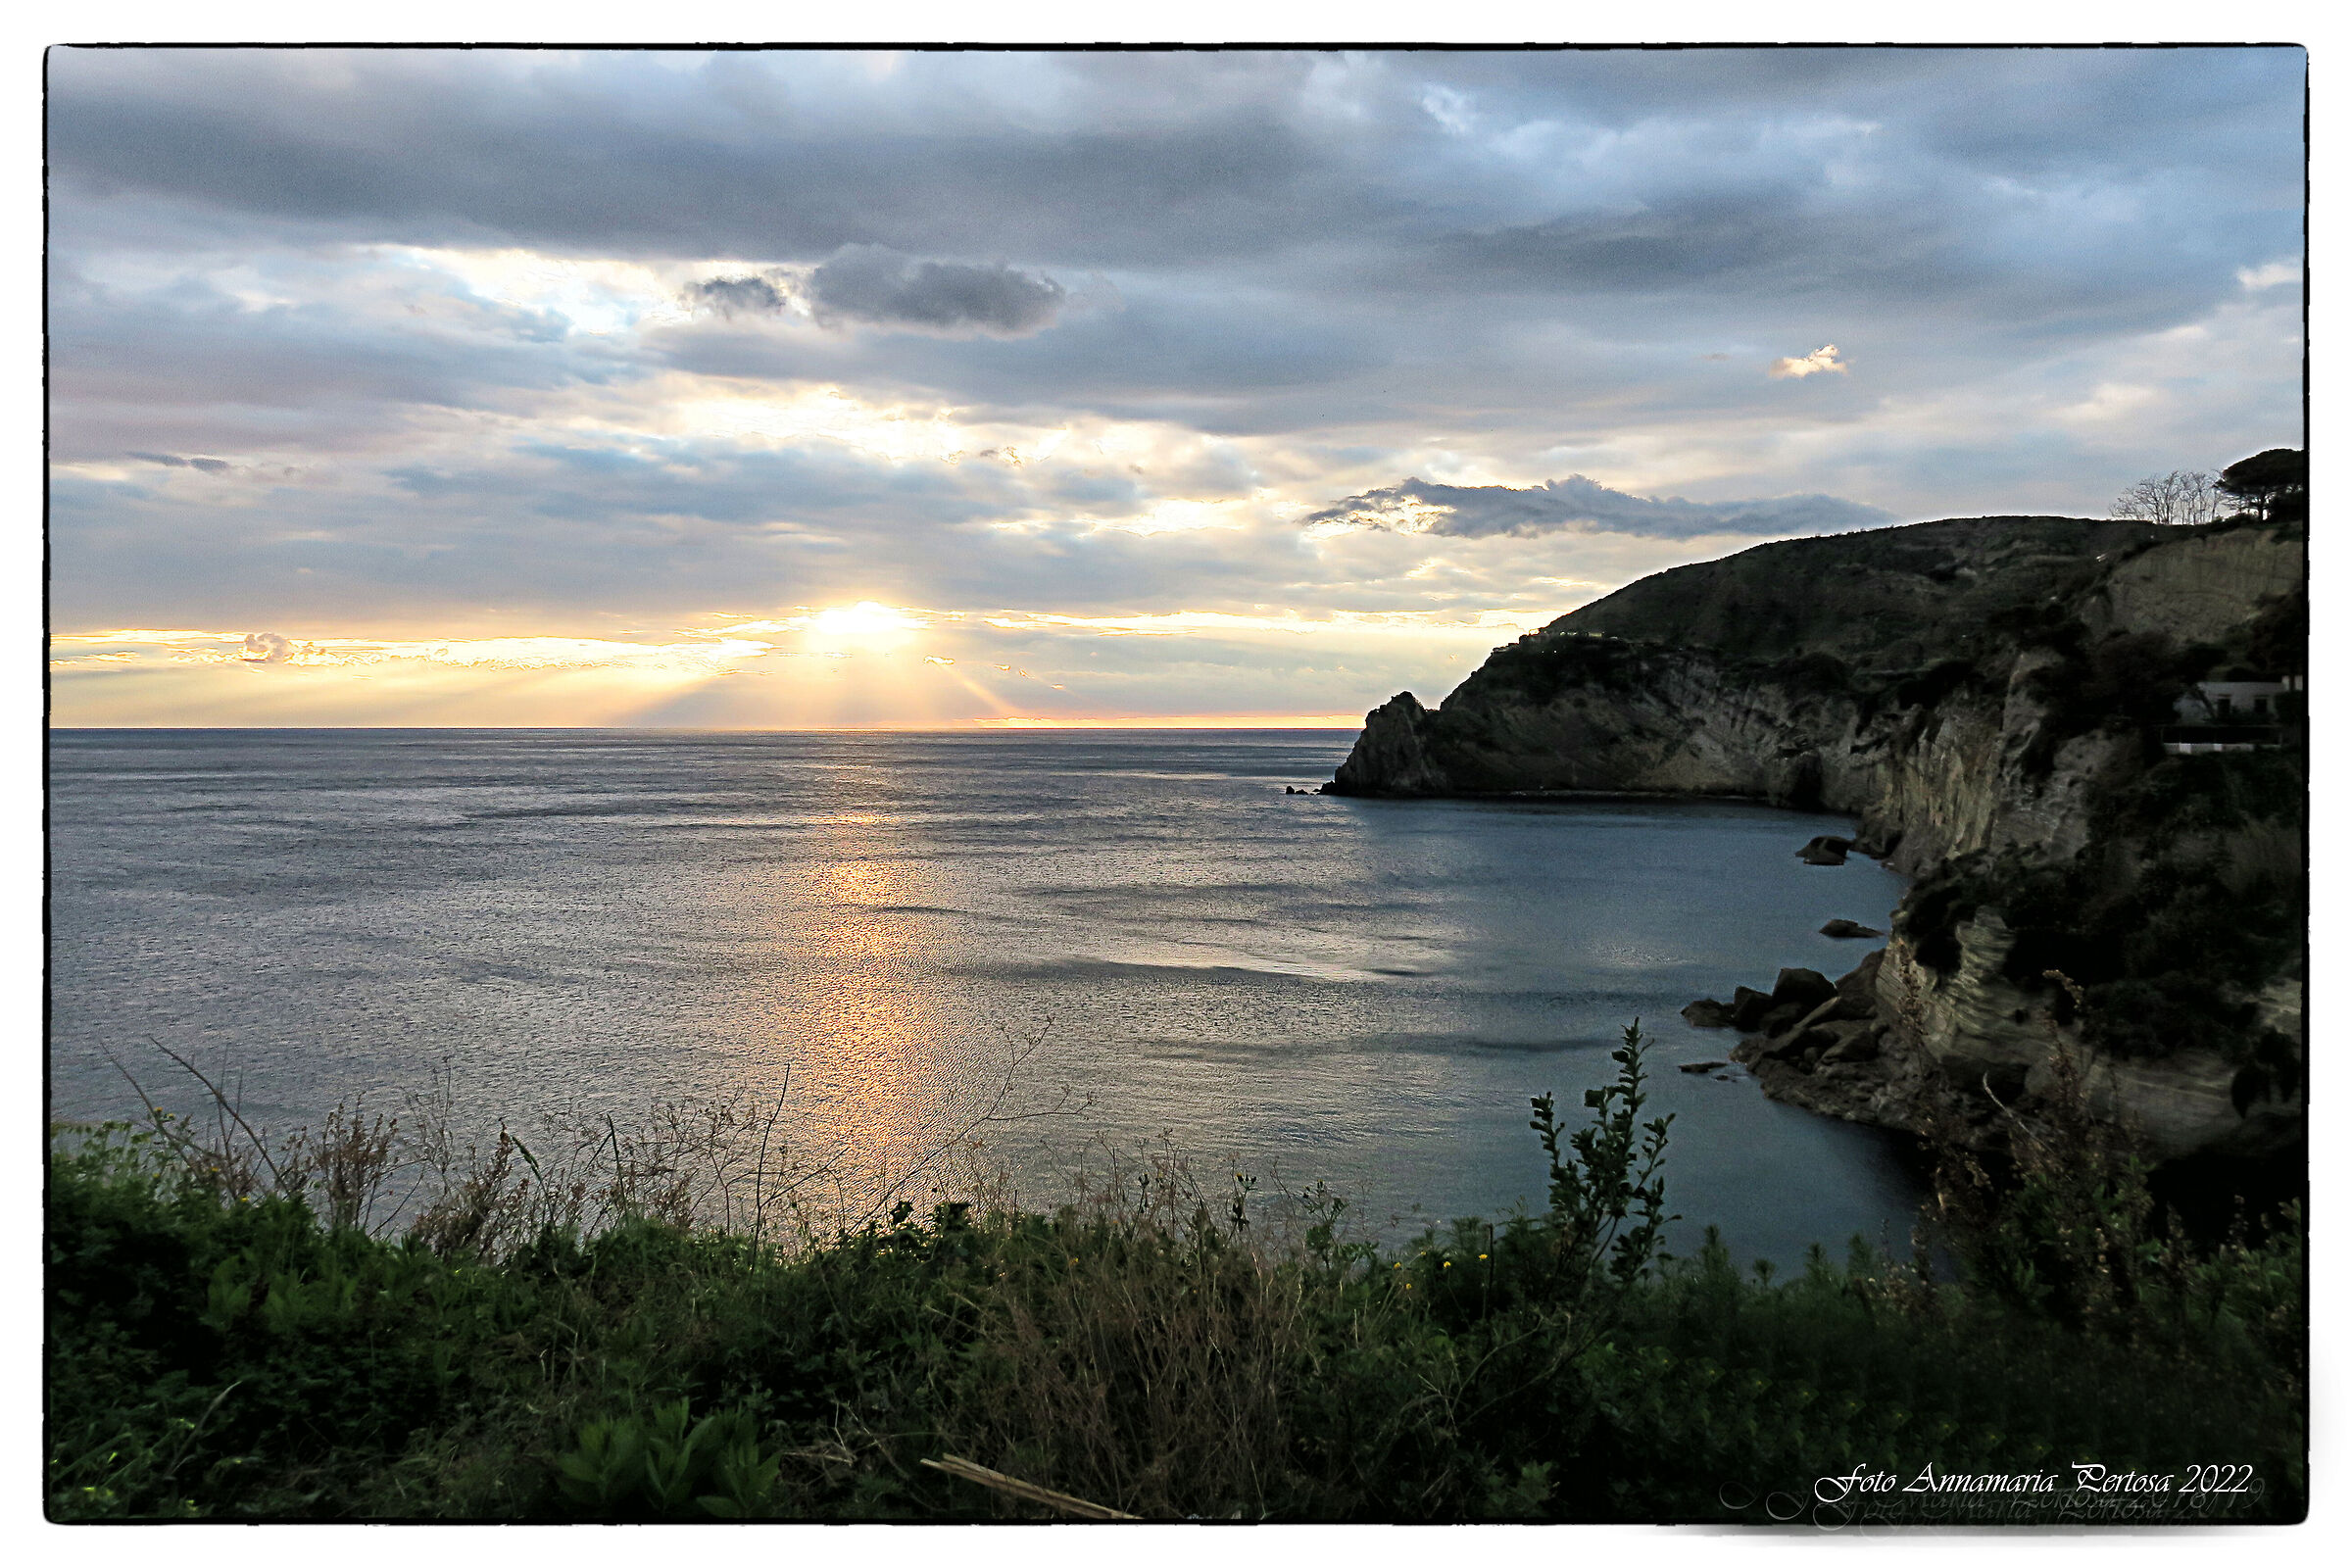 A sunset in Ischia...